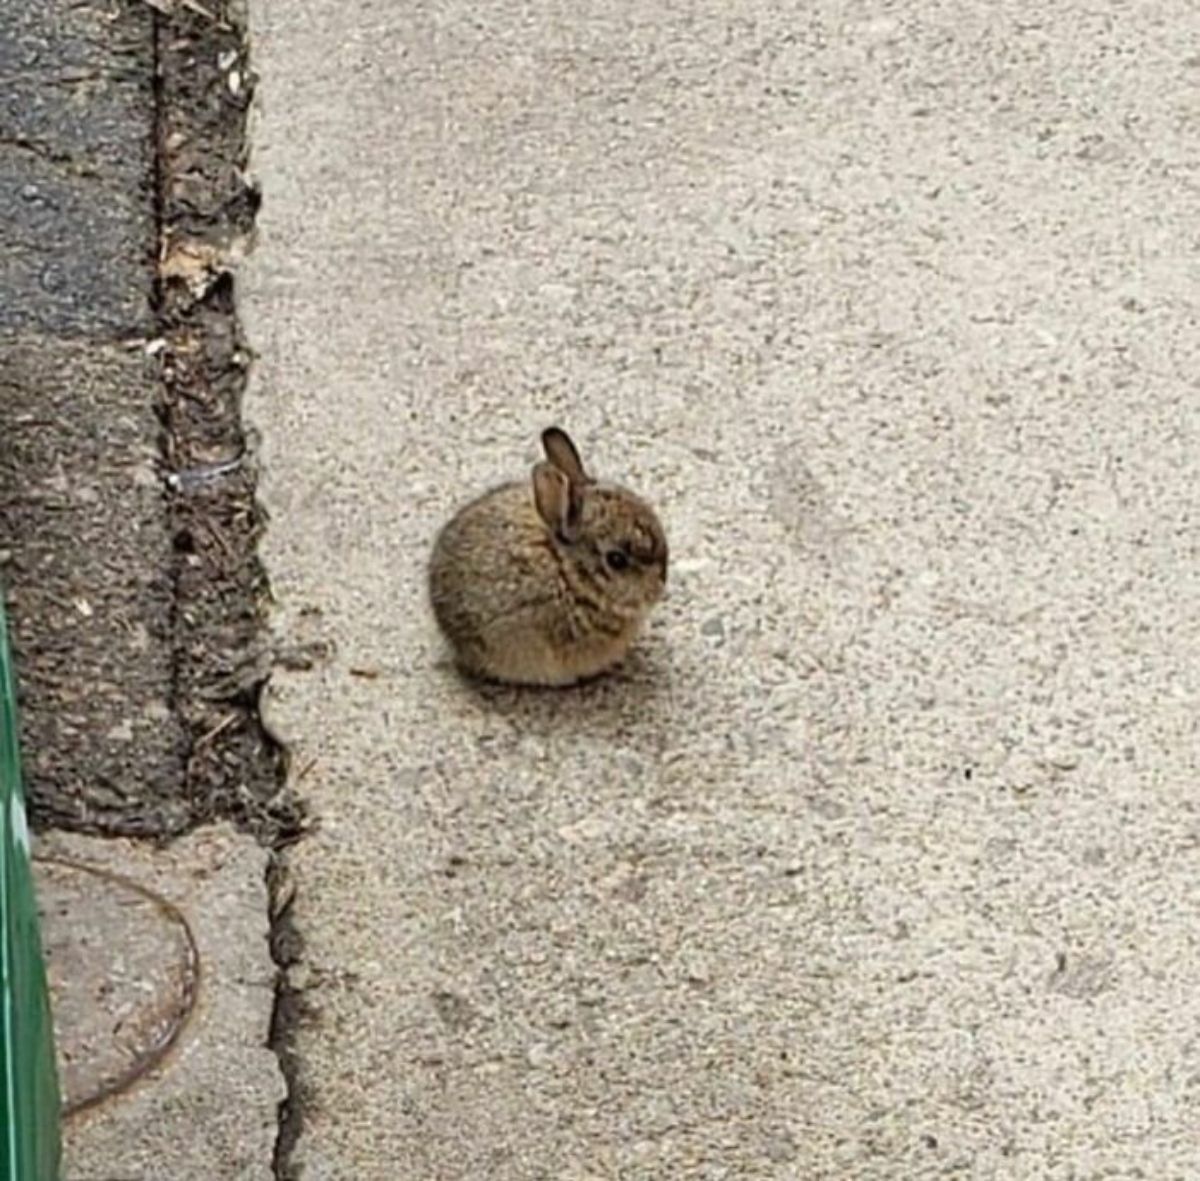 small round rabbit on the ground